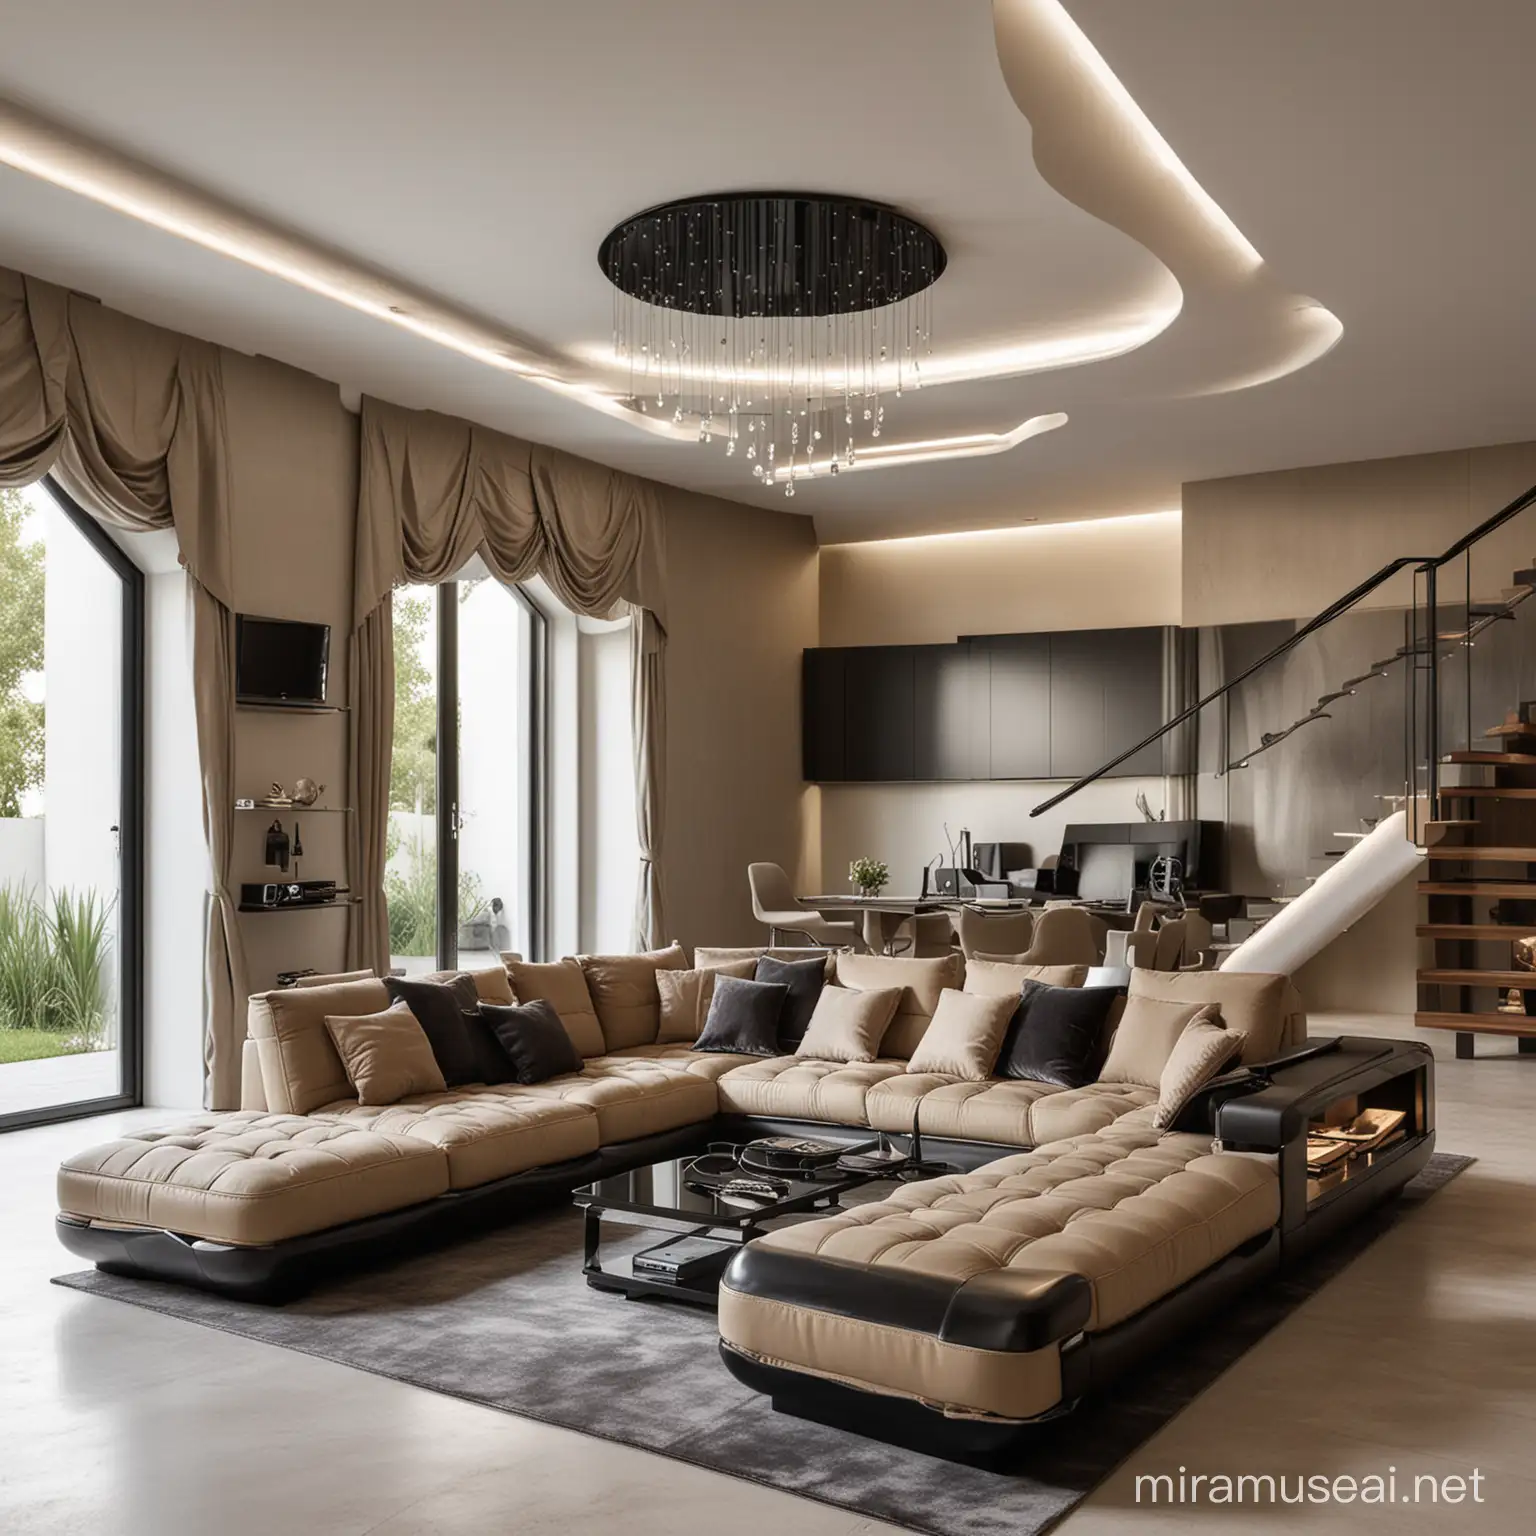 Futuristic Villa Interior with Modular Sofa and HighTech Amenities